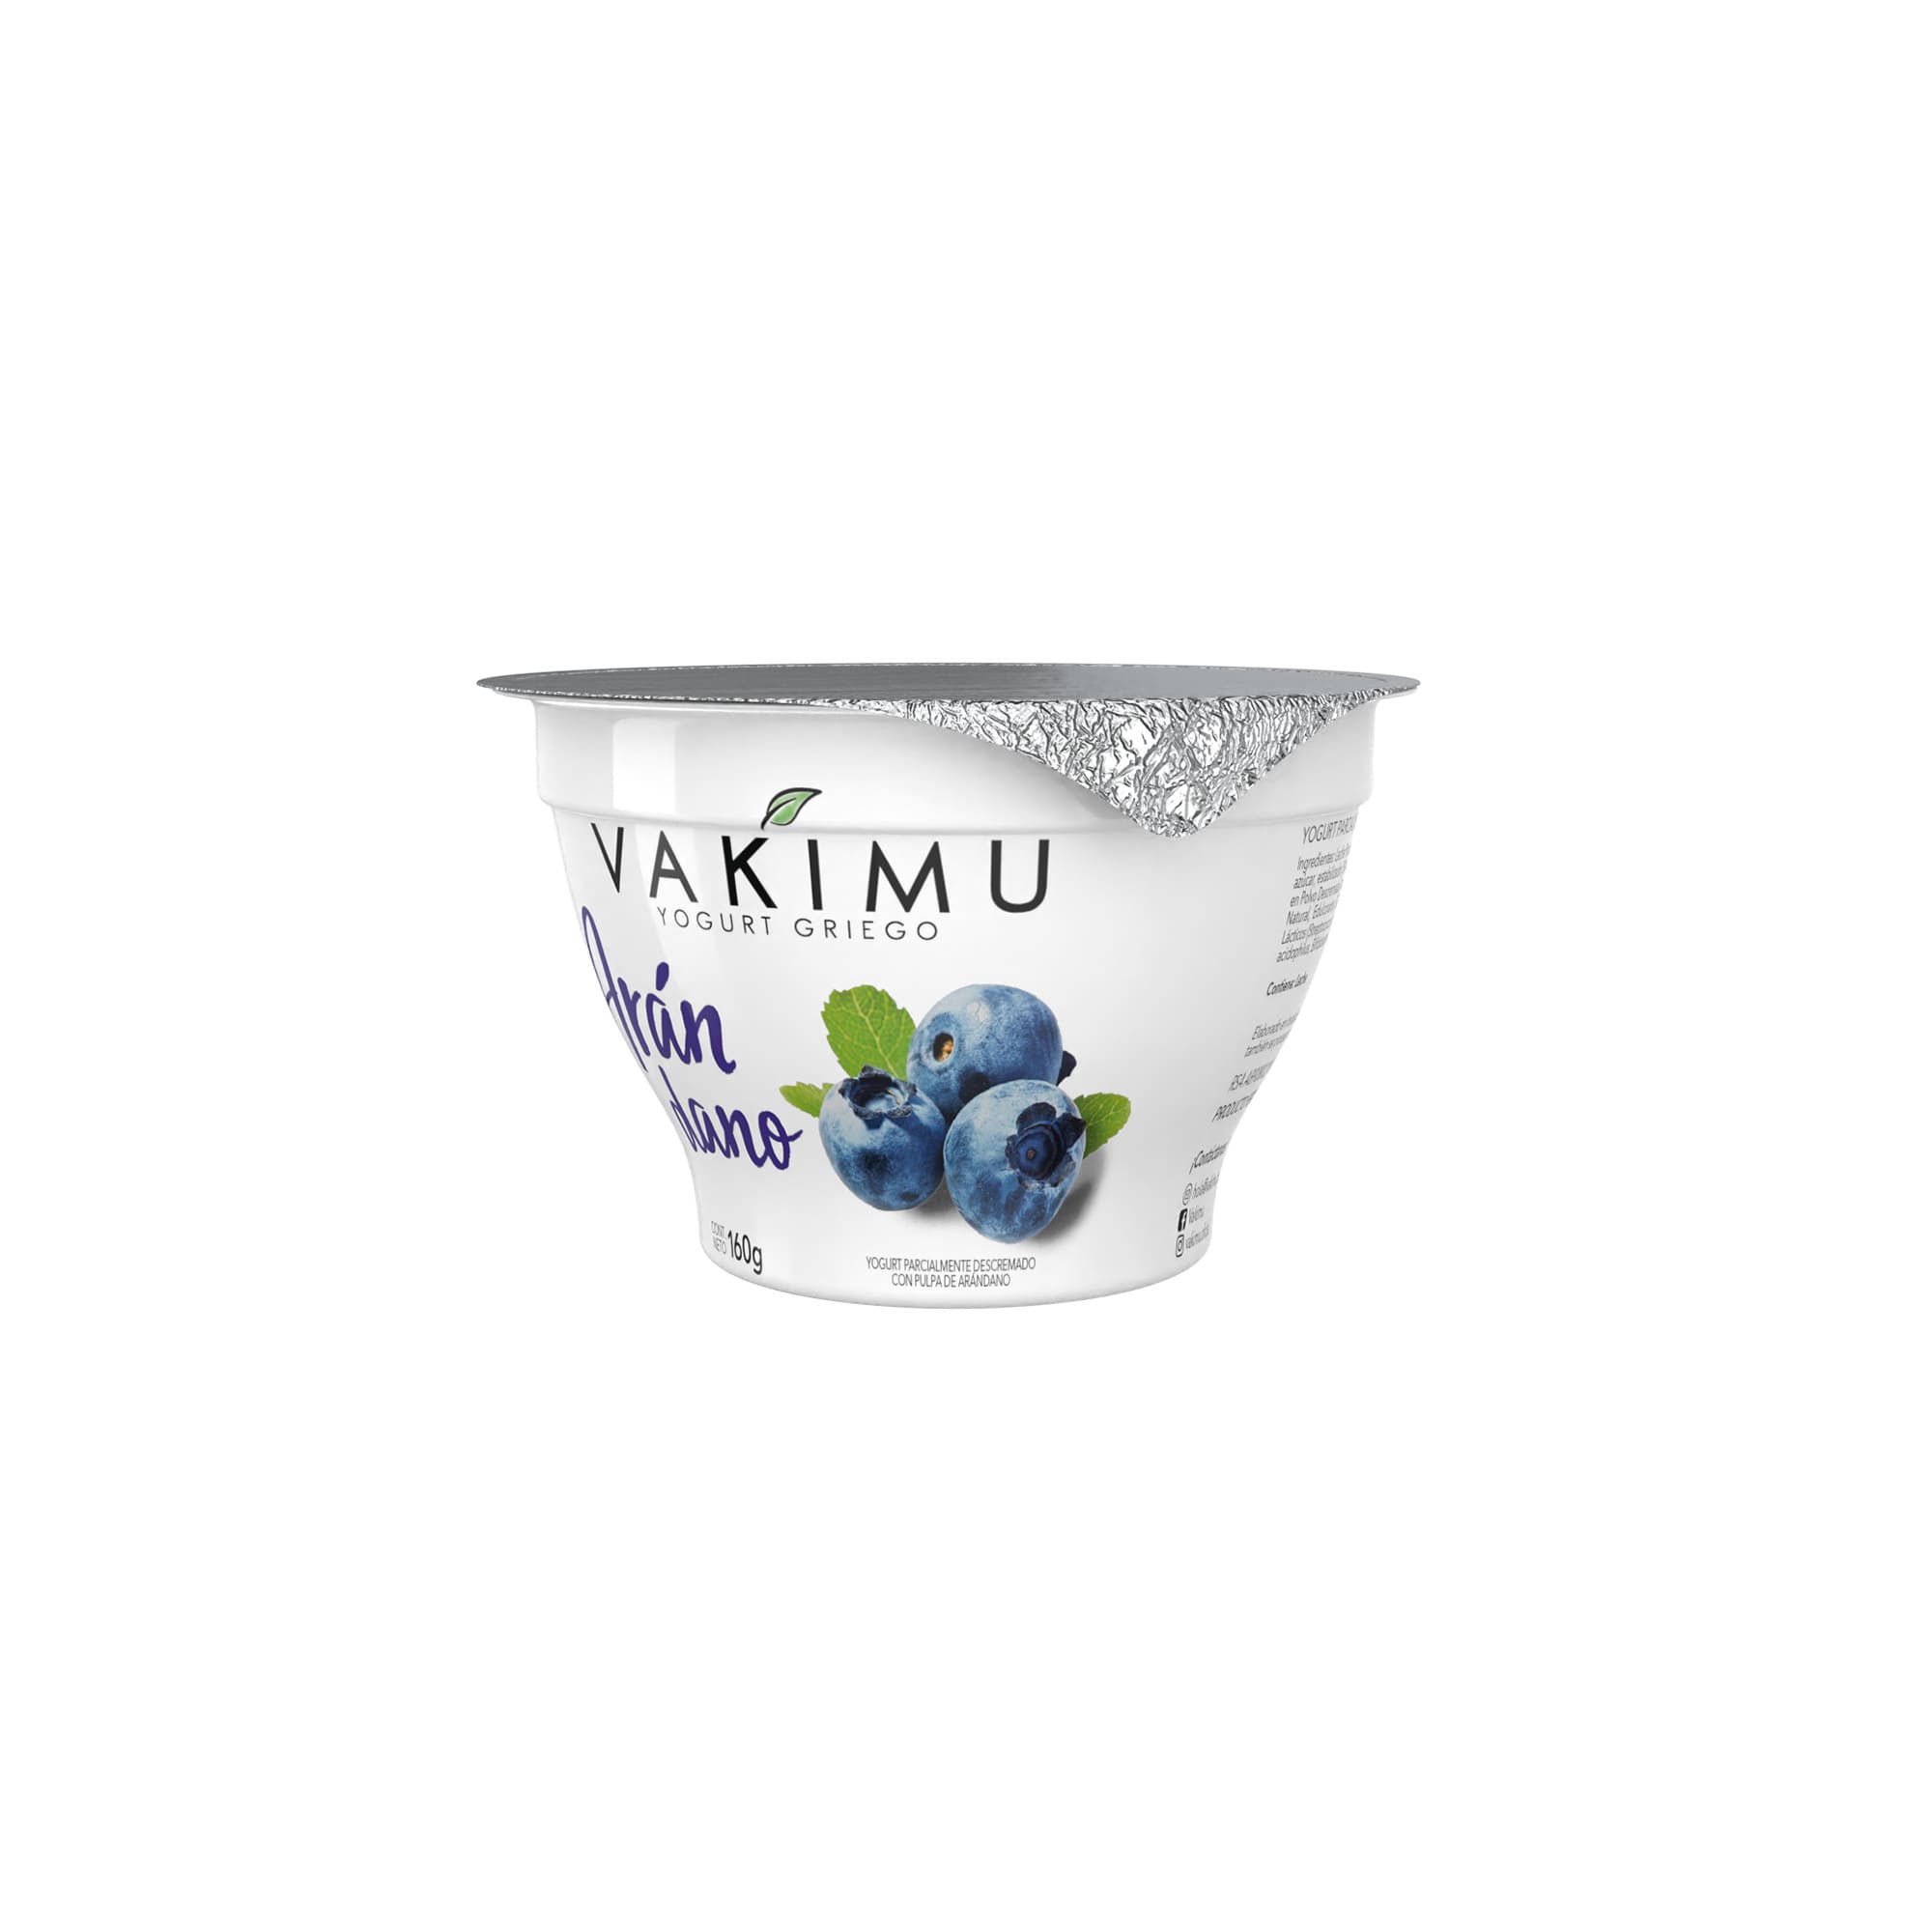 Yogurt Griego Vakimu Arándano 160g